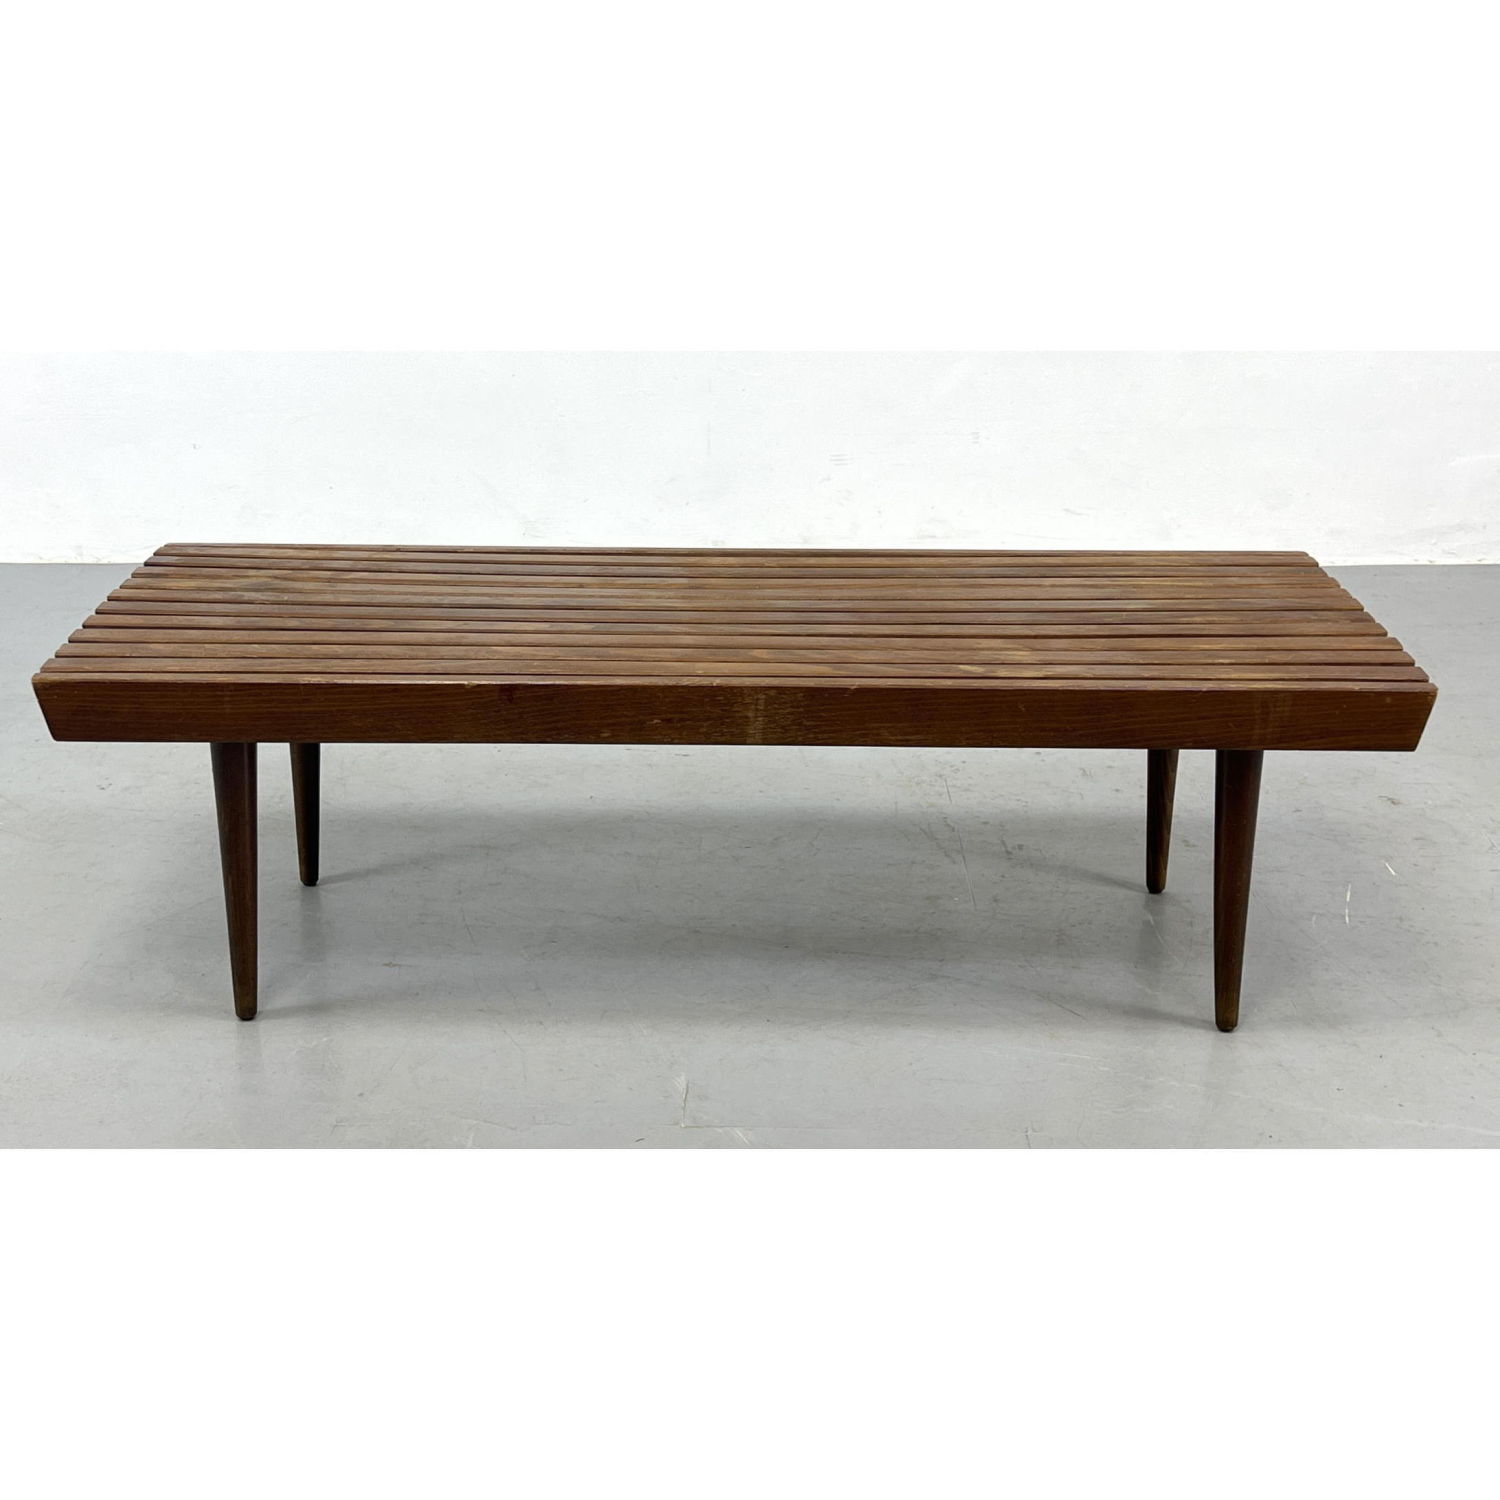 American Modern Slat bench Table  2fe7f0